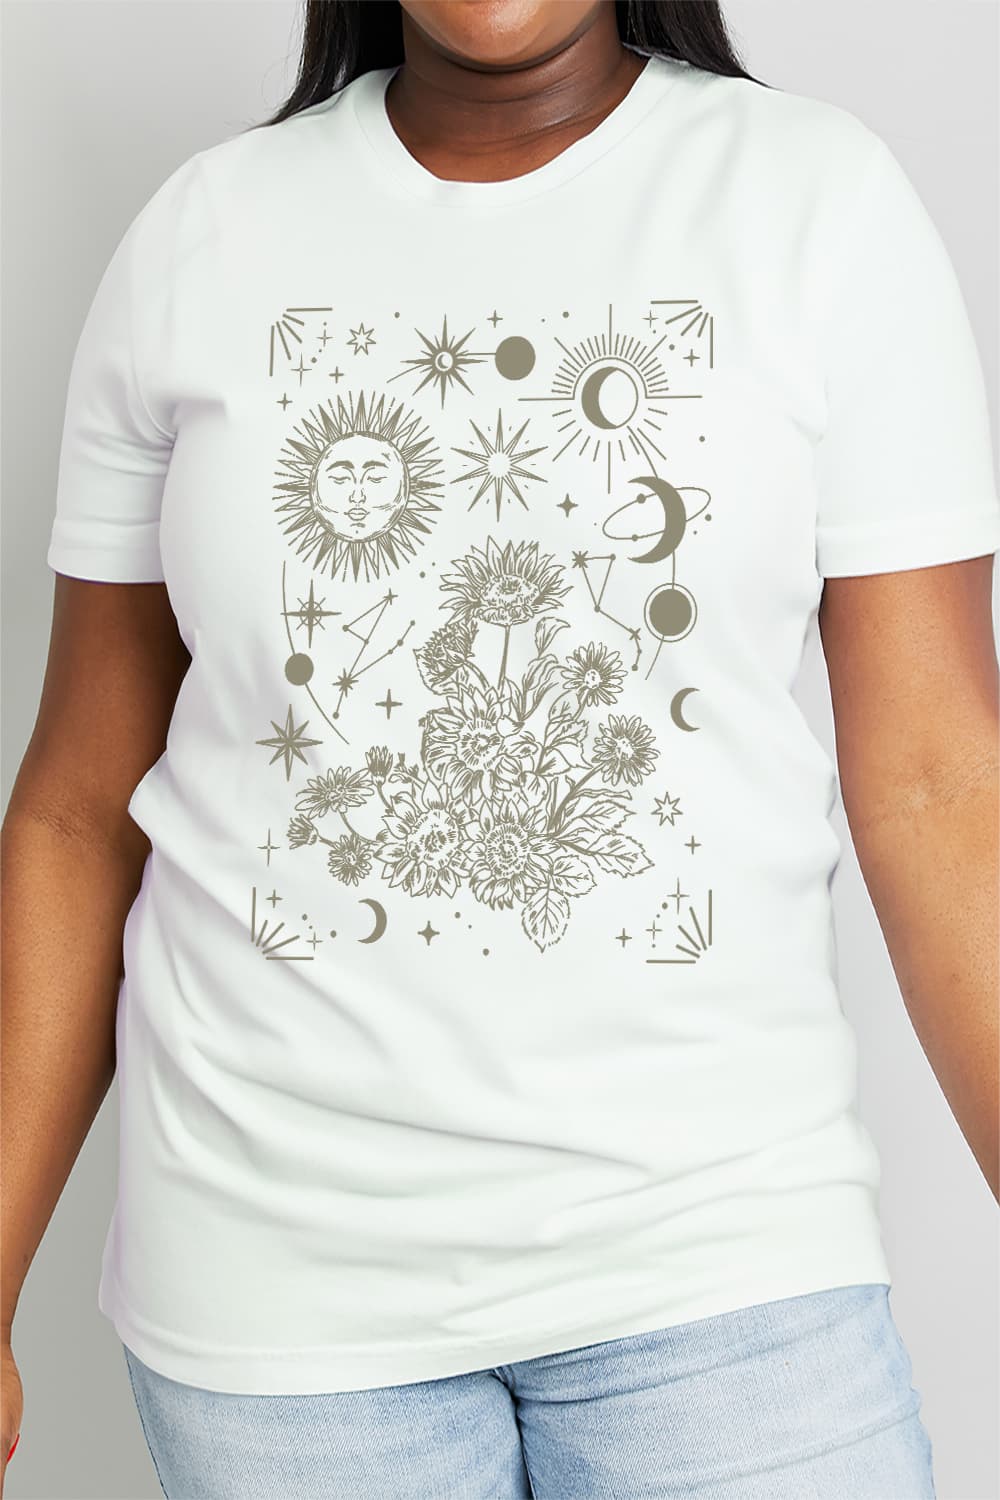 Celestial Moon Sun Stars Graphic Short Sleeve 100% Cotton Tee Shirt (Plus Size Available)